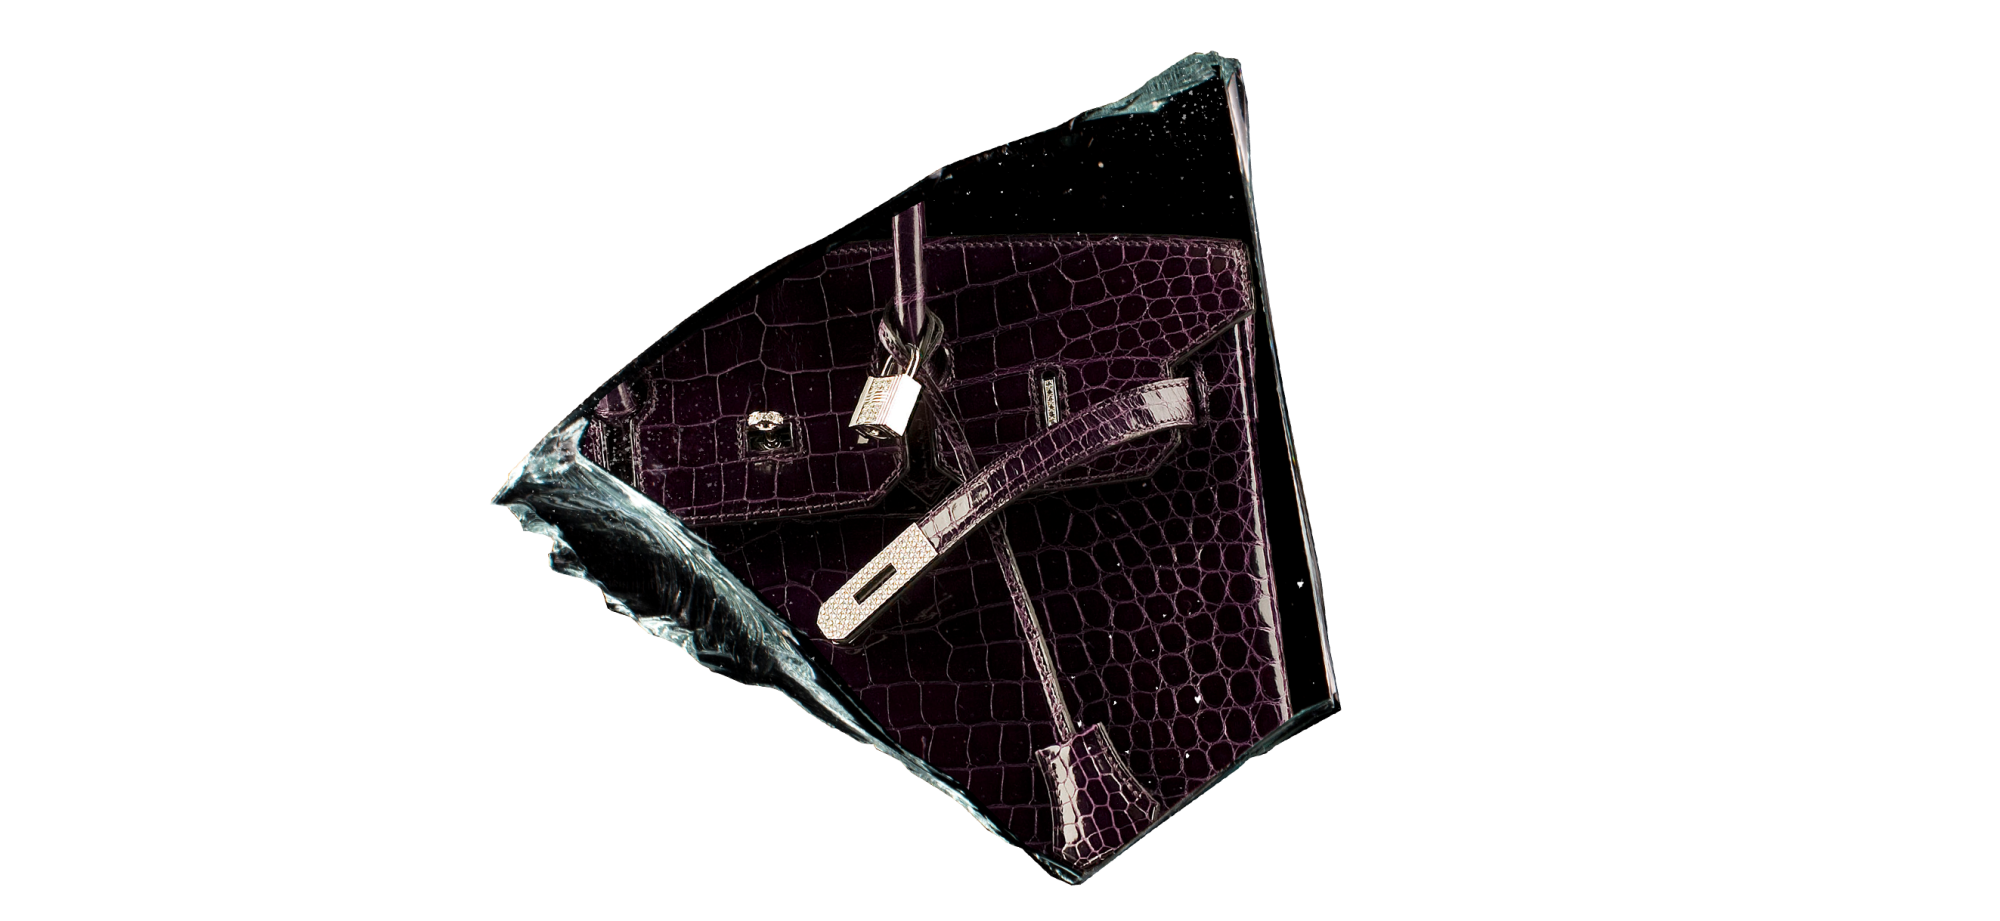 A dark Birkin bag with a purple hue, superimposed onto a dark shard of glass